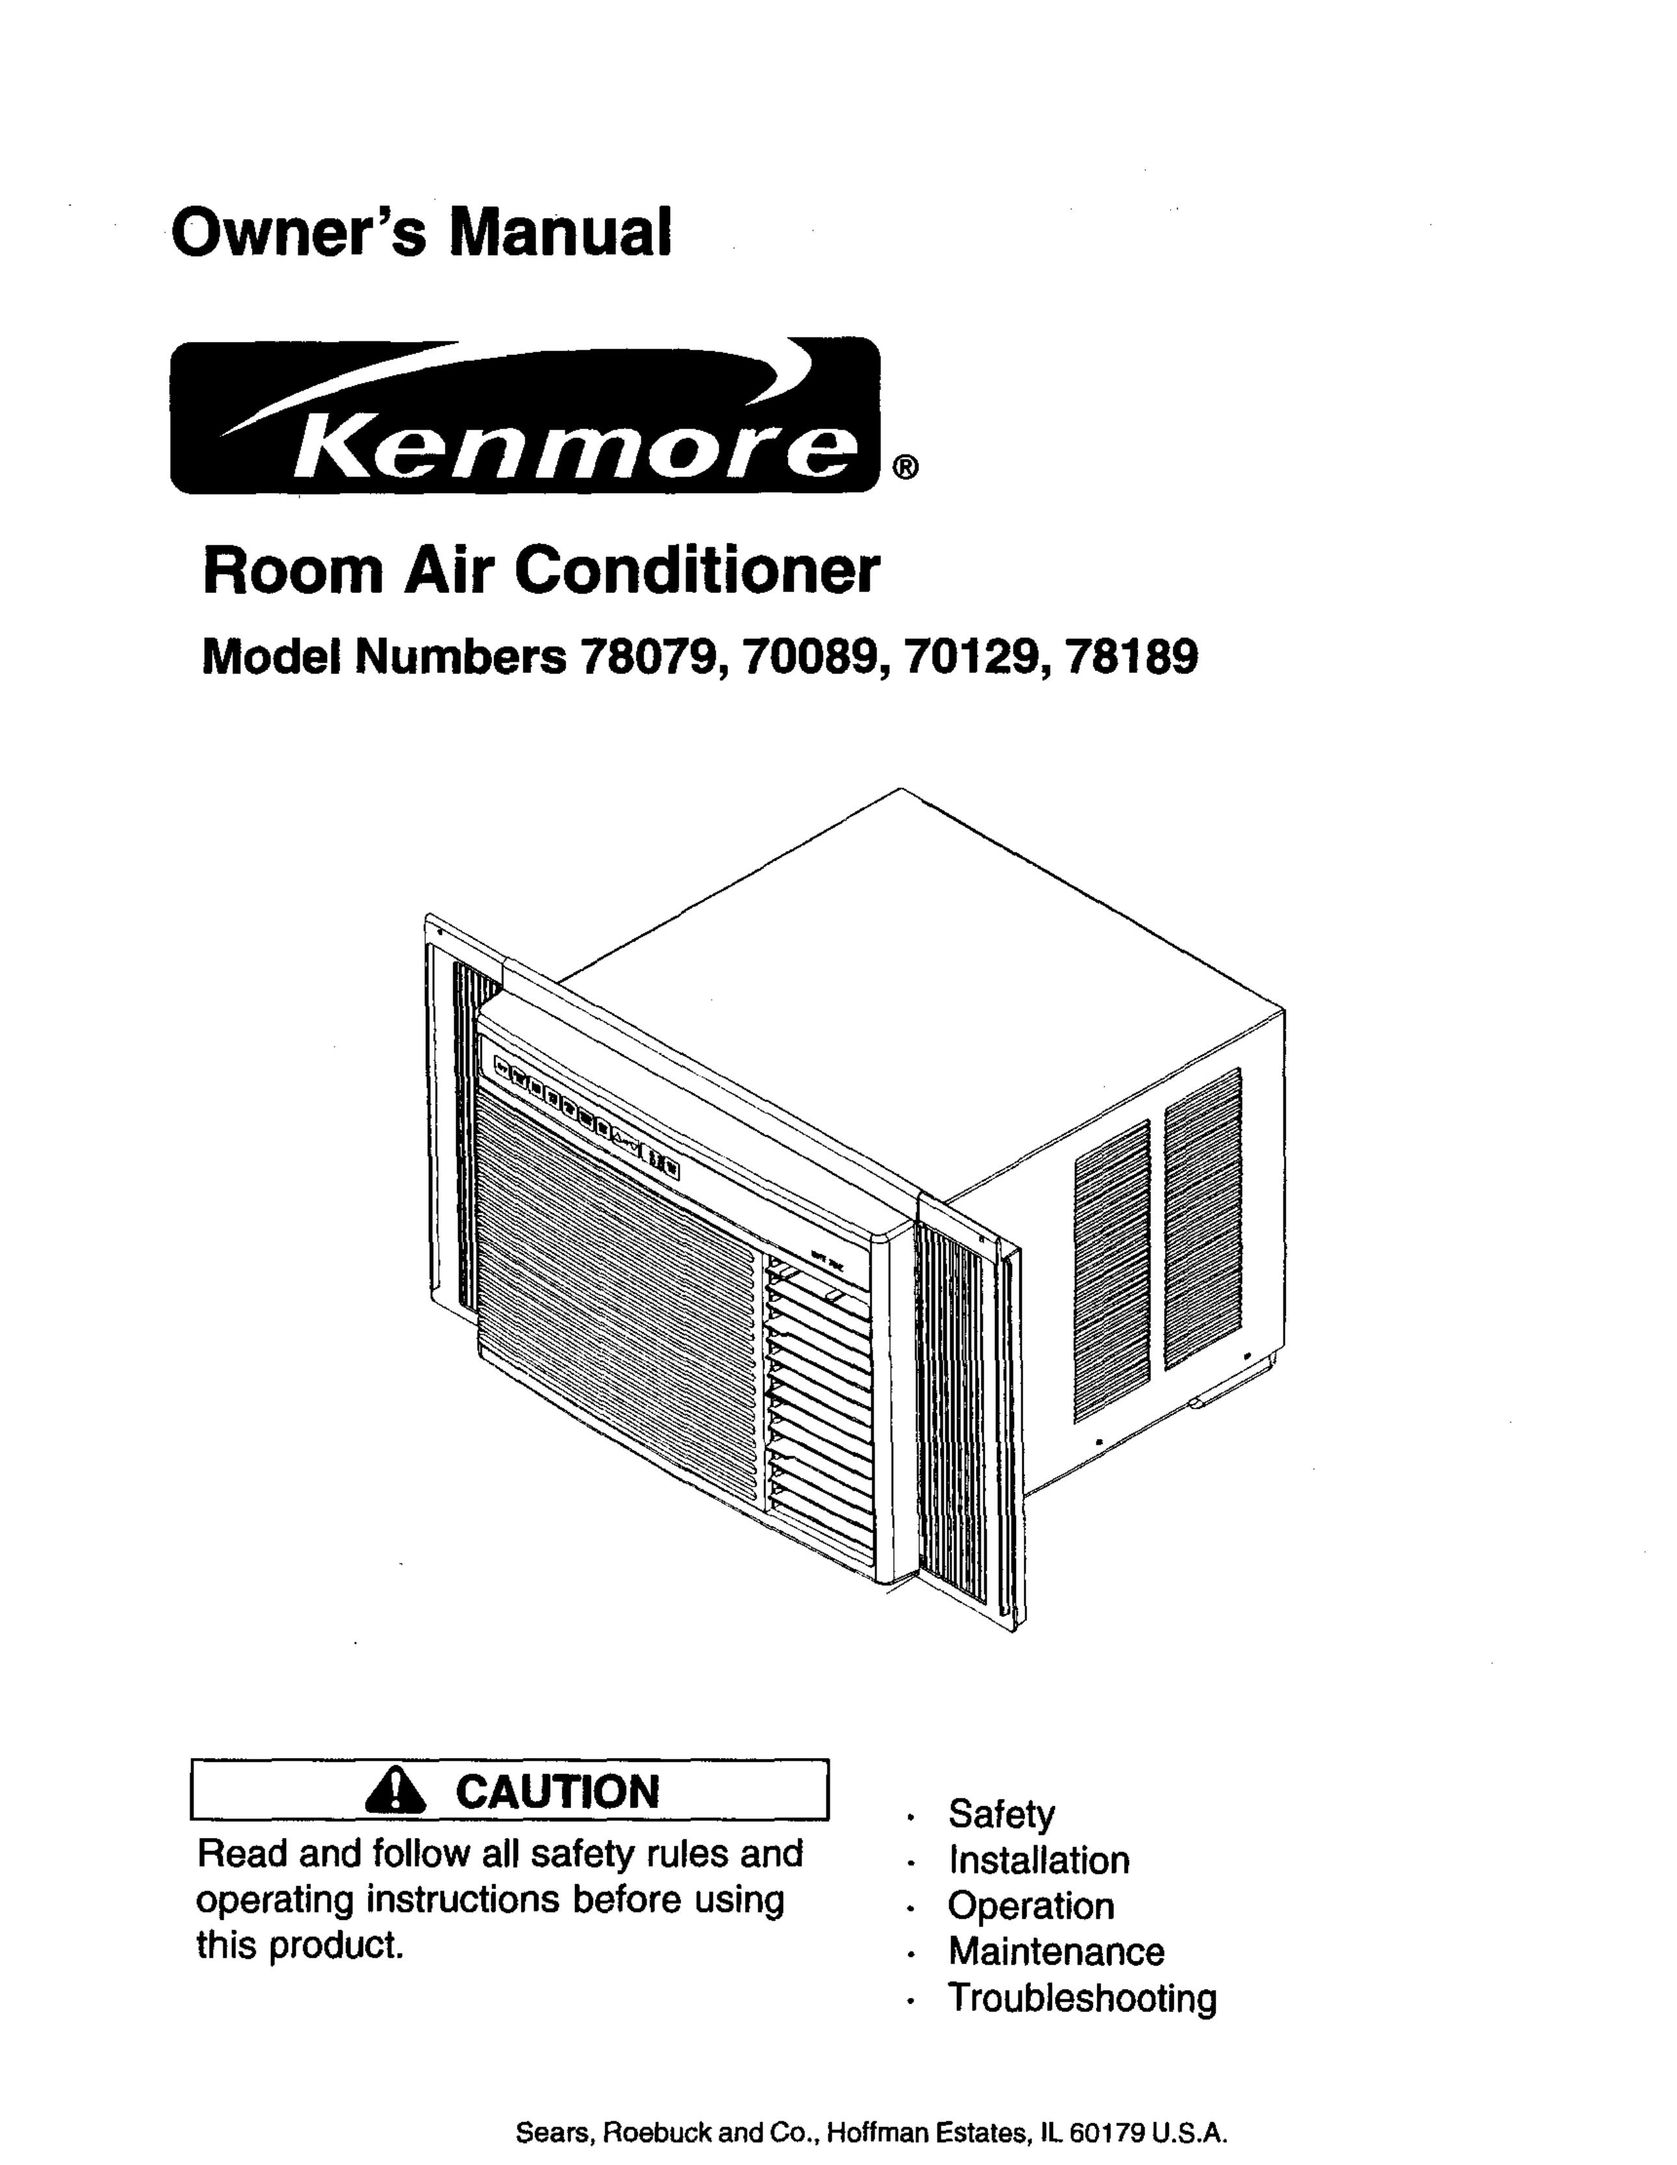 Kenmore 70129 Air Conditioner User Manual